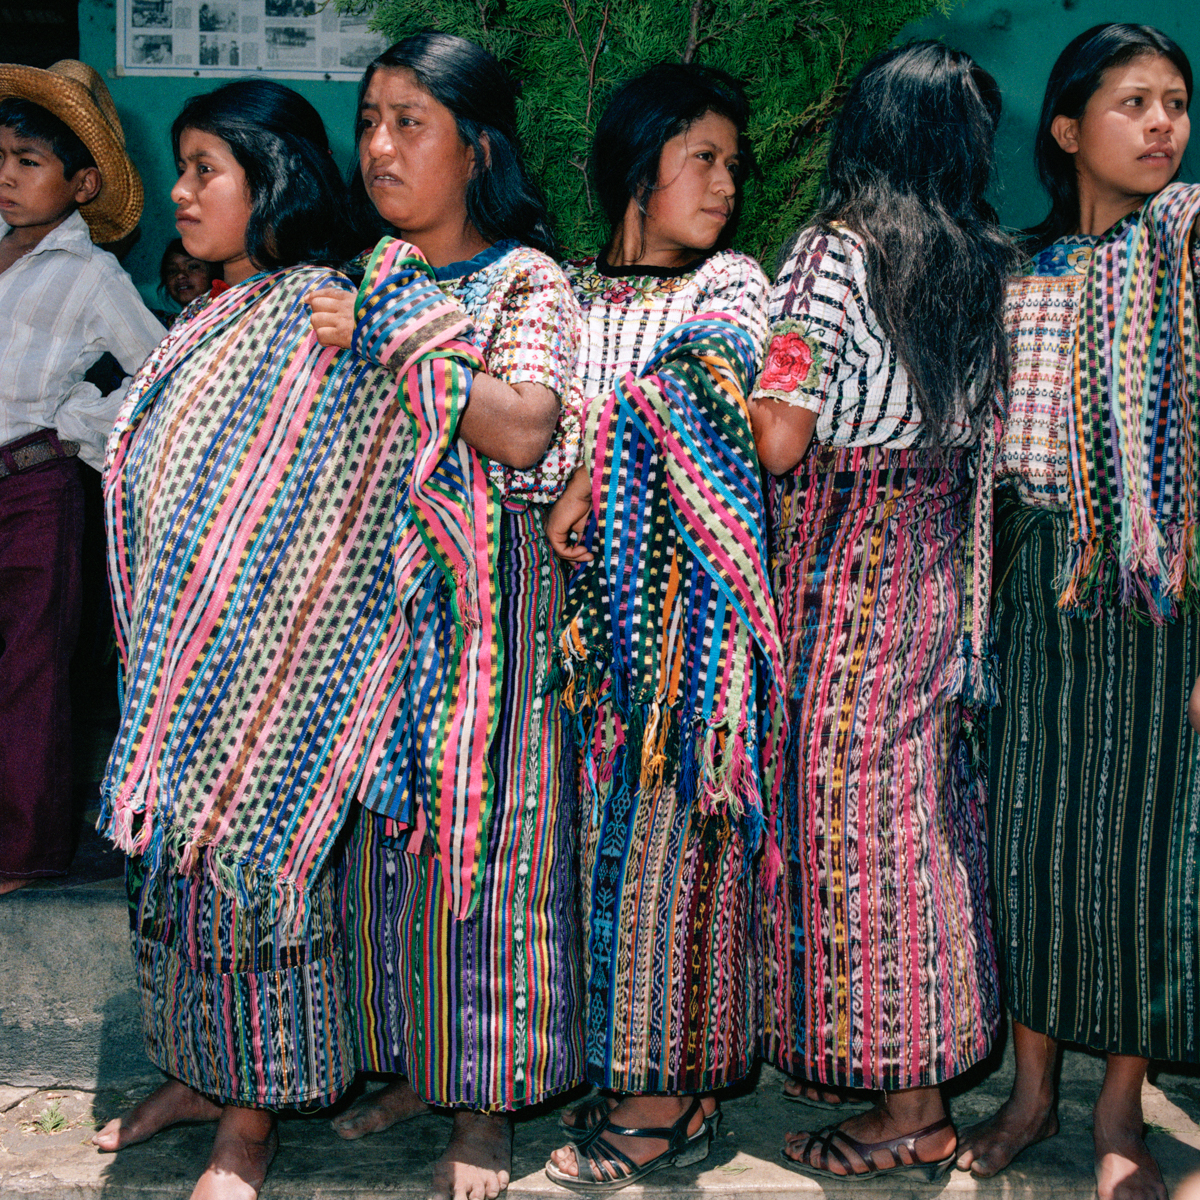 Young Women, Santiago Atitlán, Guatemala 1986